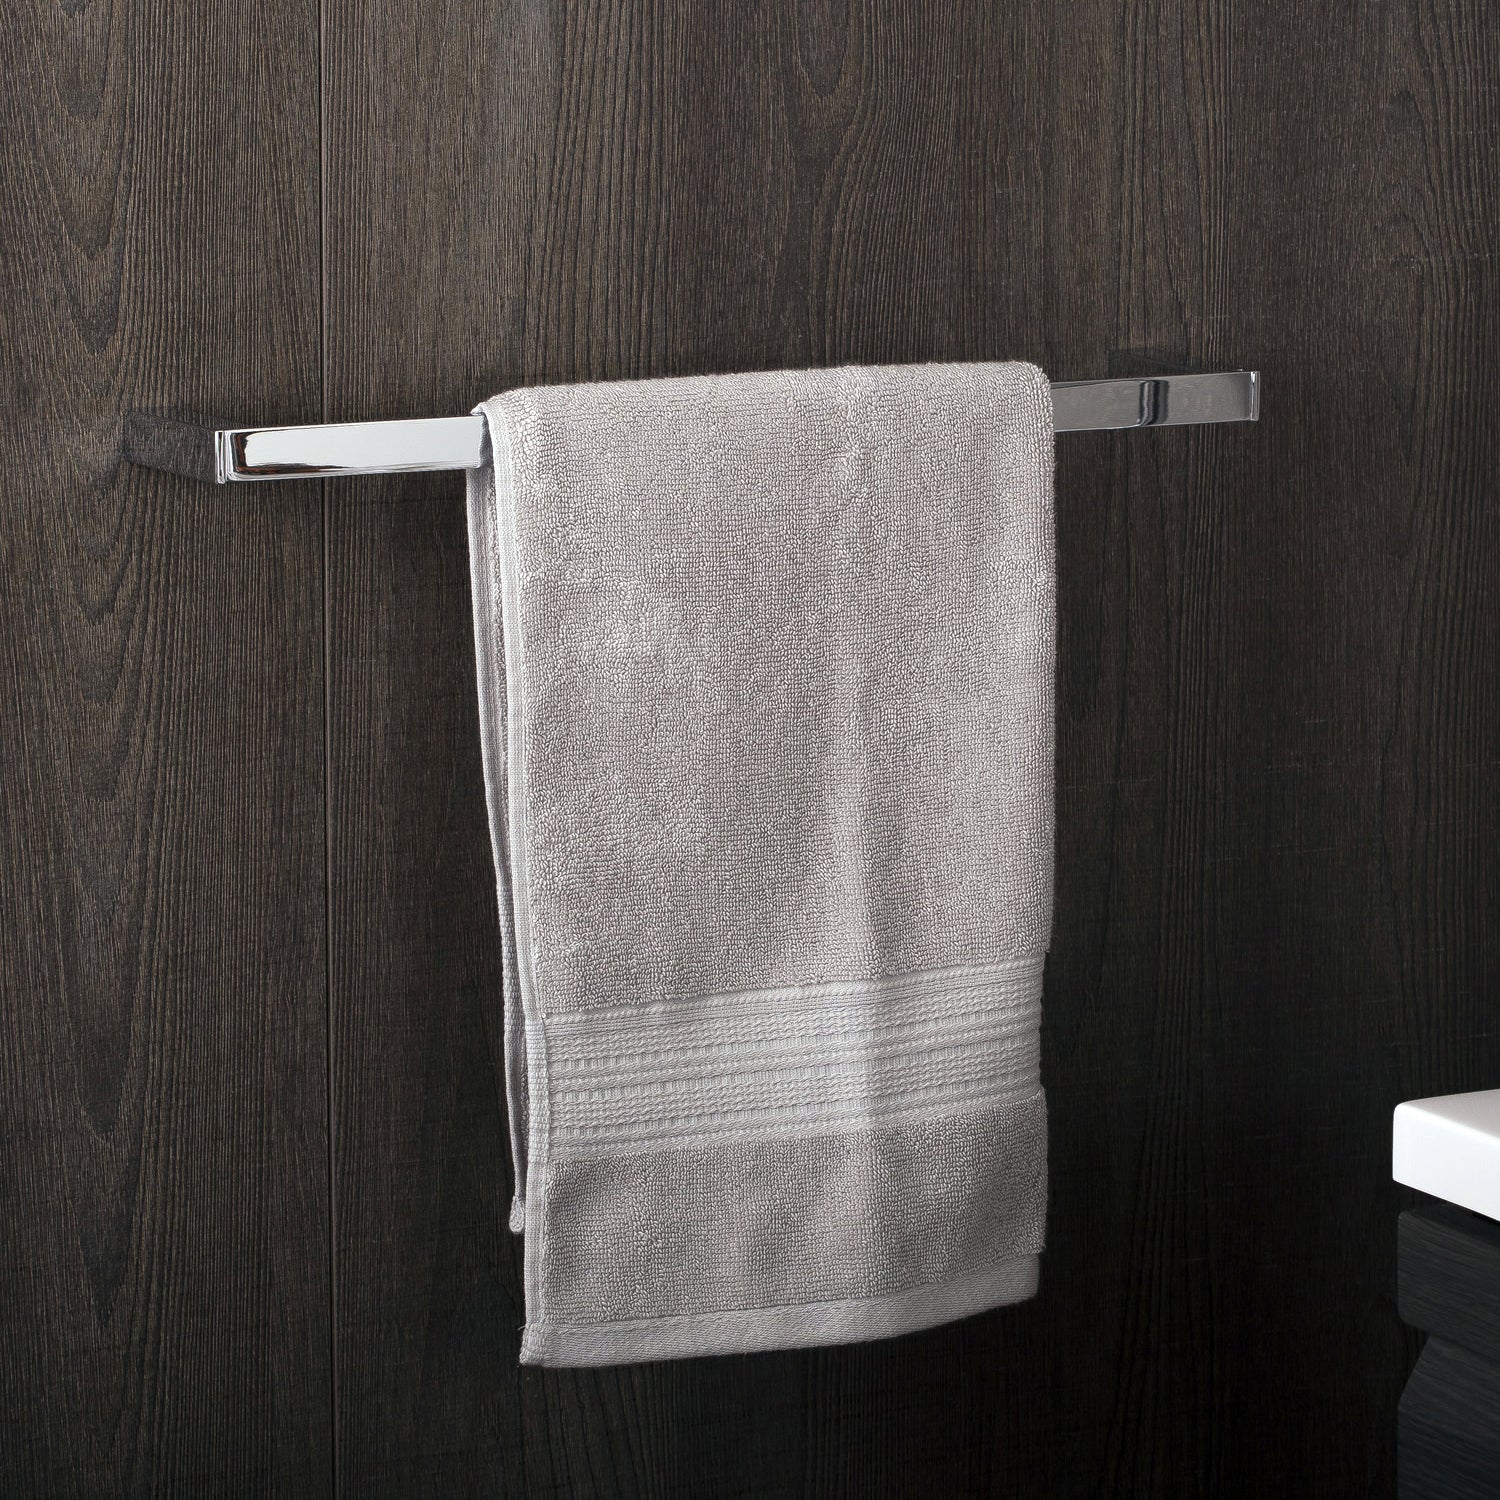 COSMIC Bathlife Single Towel Bar, Wall Mount, Brass Body, Chrome Finish, 17-3/4 x 13/16 x 3-5/16 Inches (2290169)